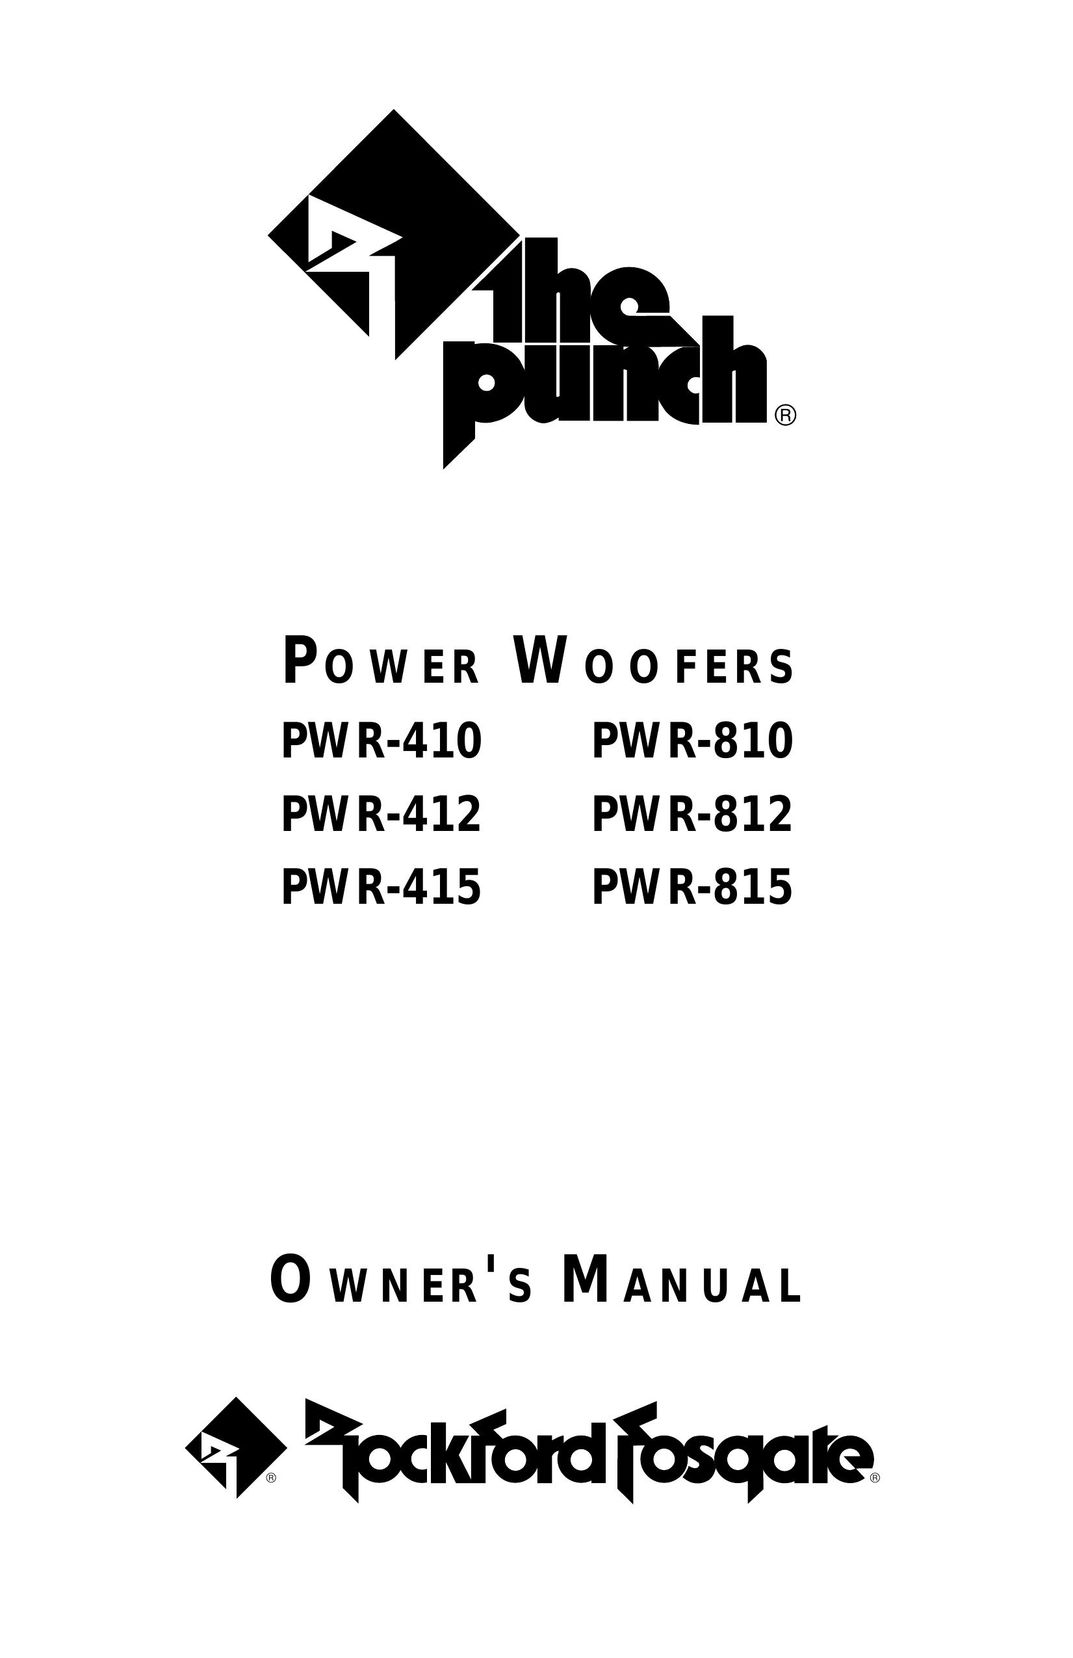 Rockford Fosgate PWR-410 Speaker User Manual